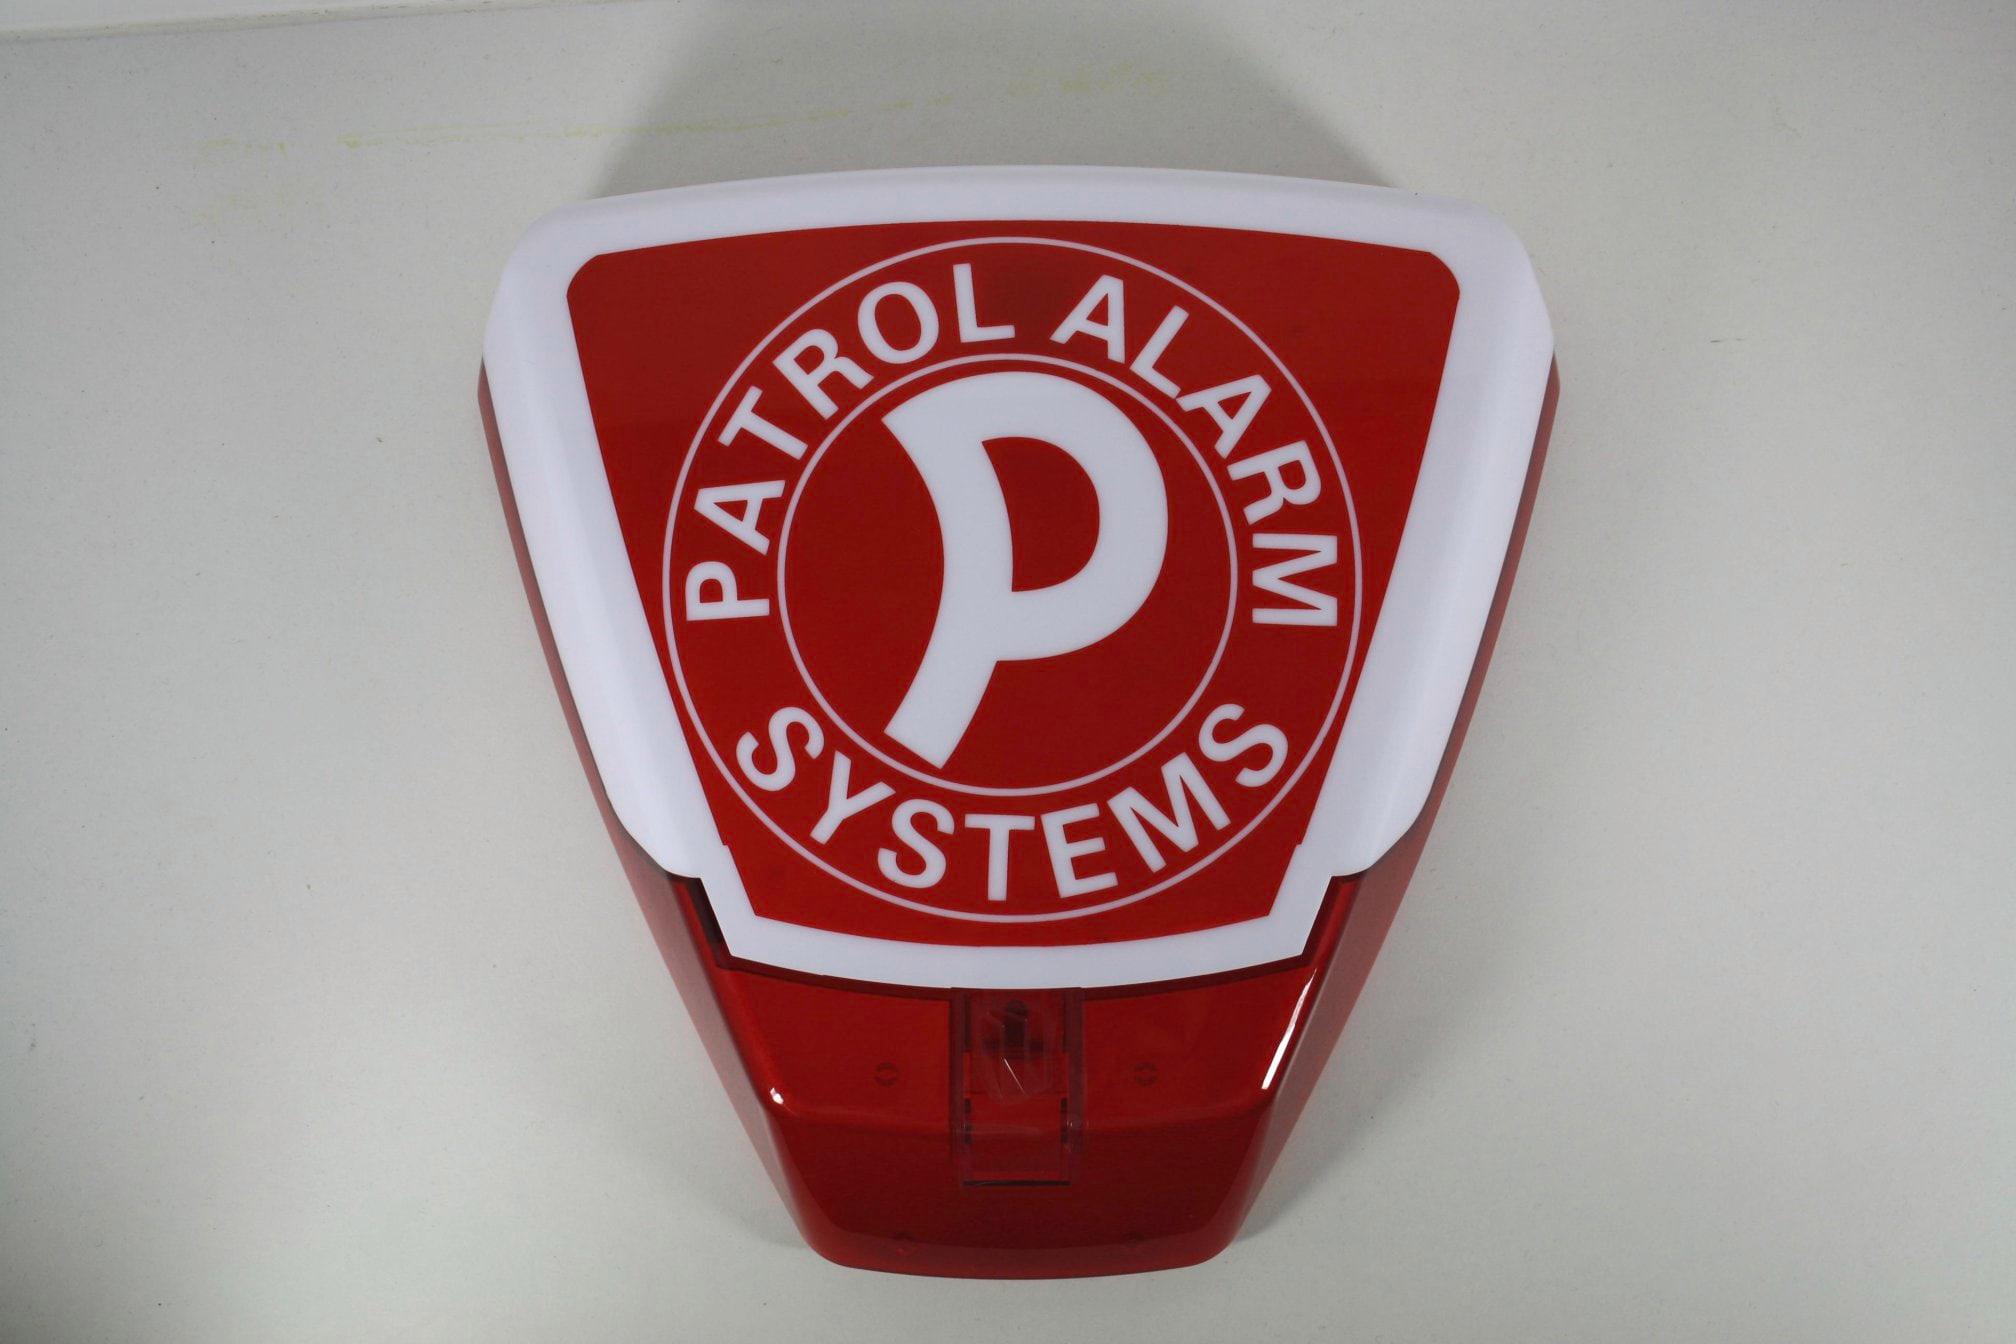 Images Patrol Alarm Systems Ltd